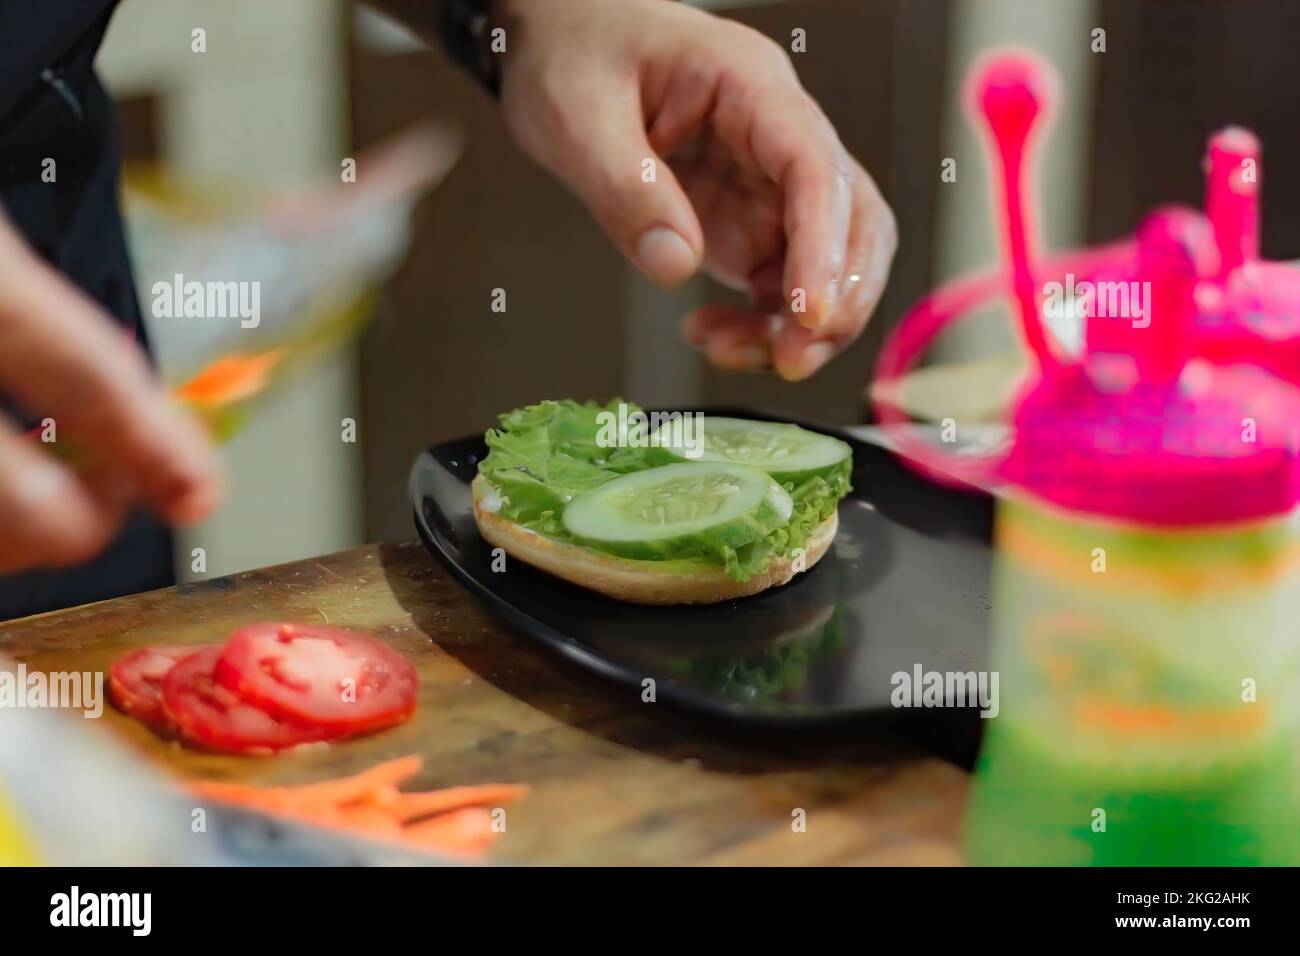 https://c8.alamy.com/comp/2KG2AHK/chef-puts-tomato-slice-for-burger-filling-on-kitchen-utensils-background-2KG2AHK.jpg